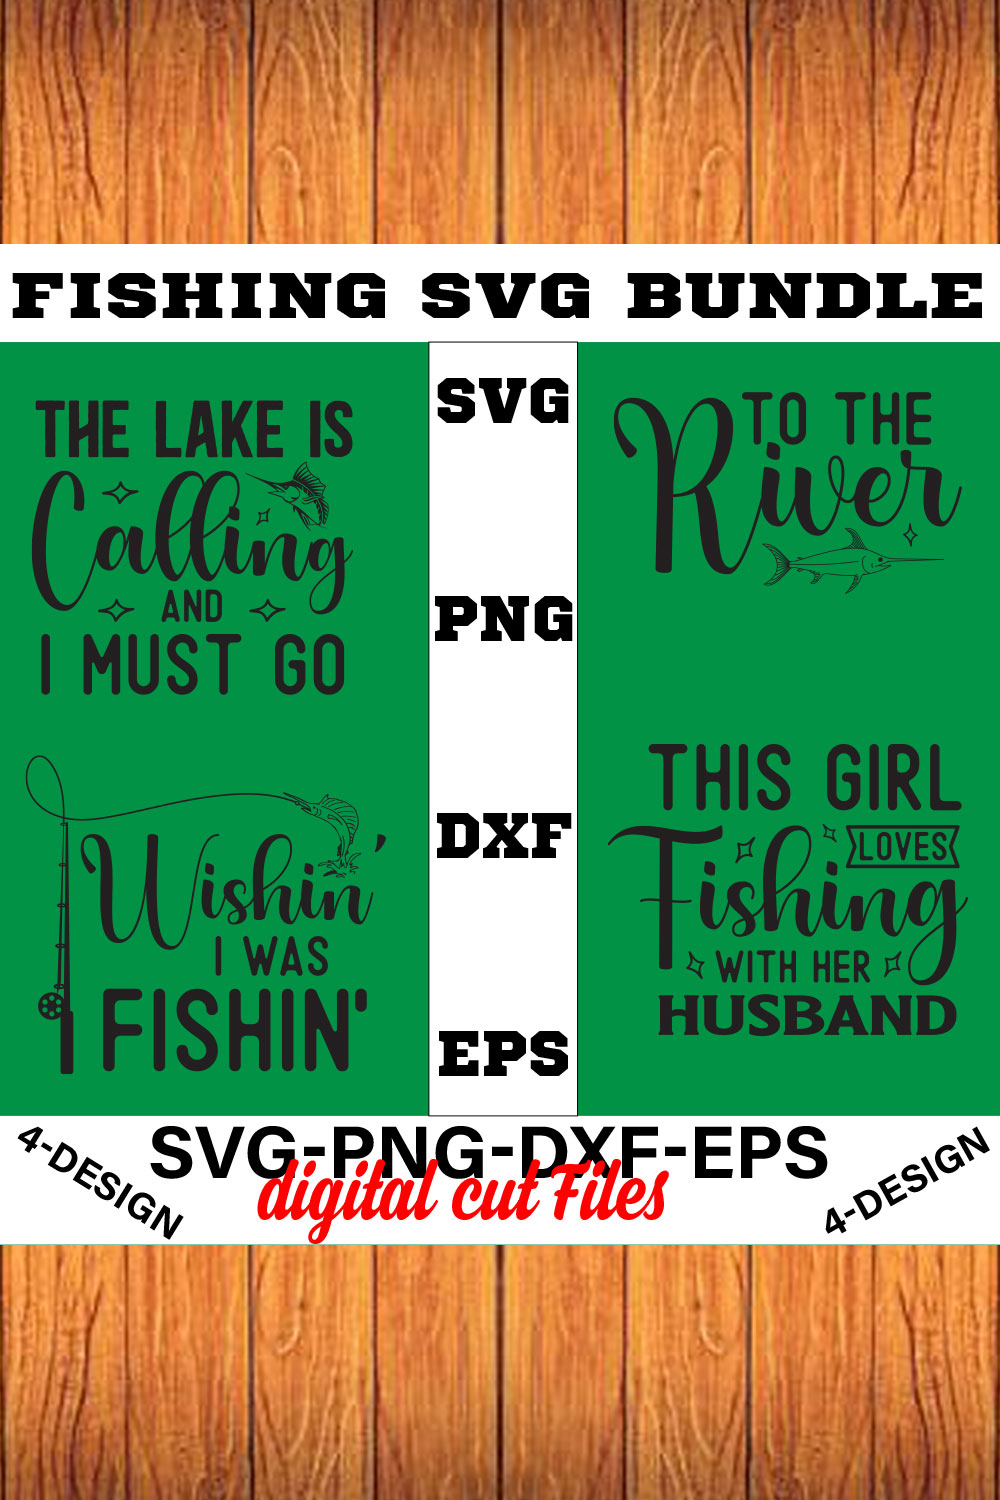 Fishing Design Bundle PNG ONLY, SVG bundle, Fishing svg, Fishing life Volume-05 pinterest preview image.